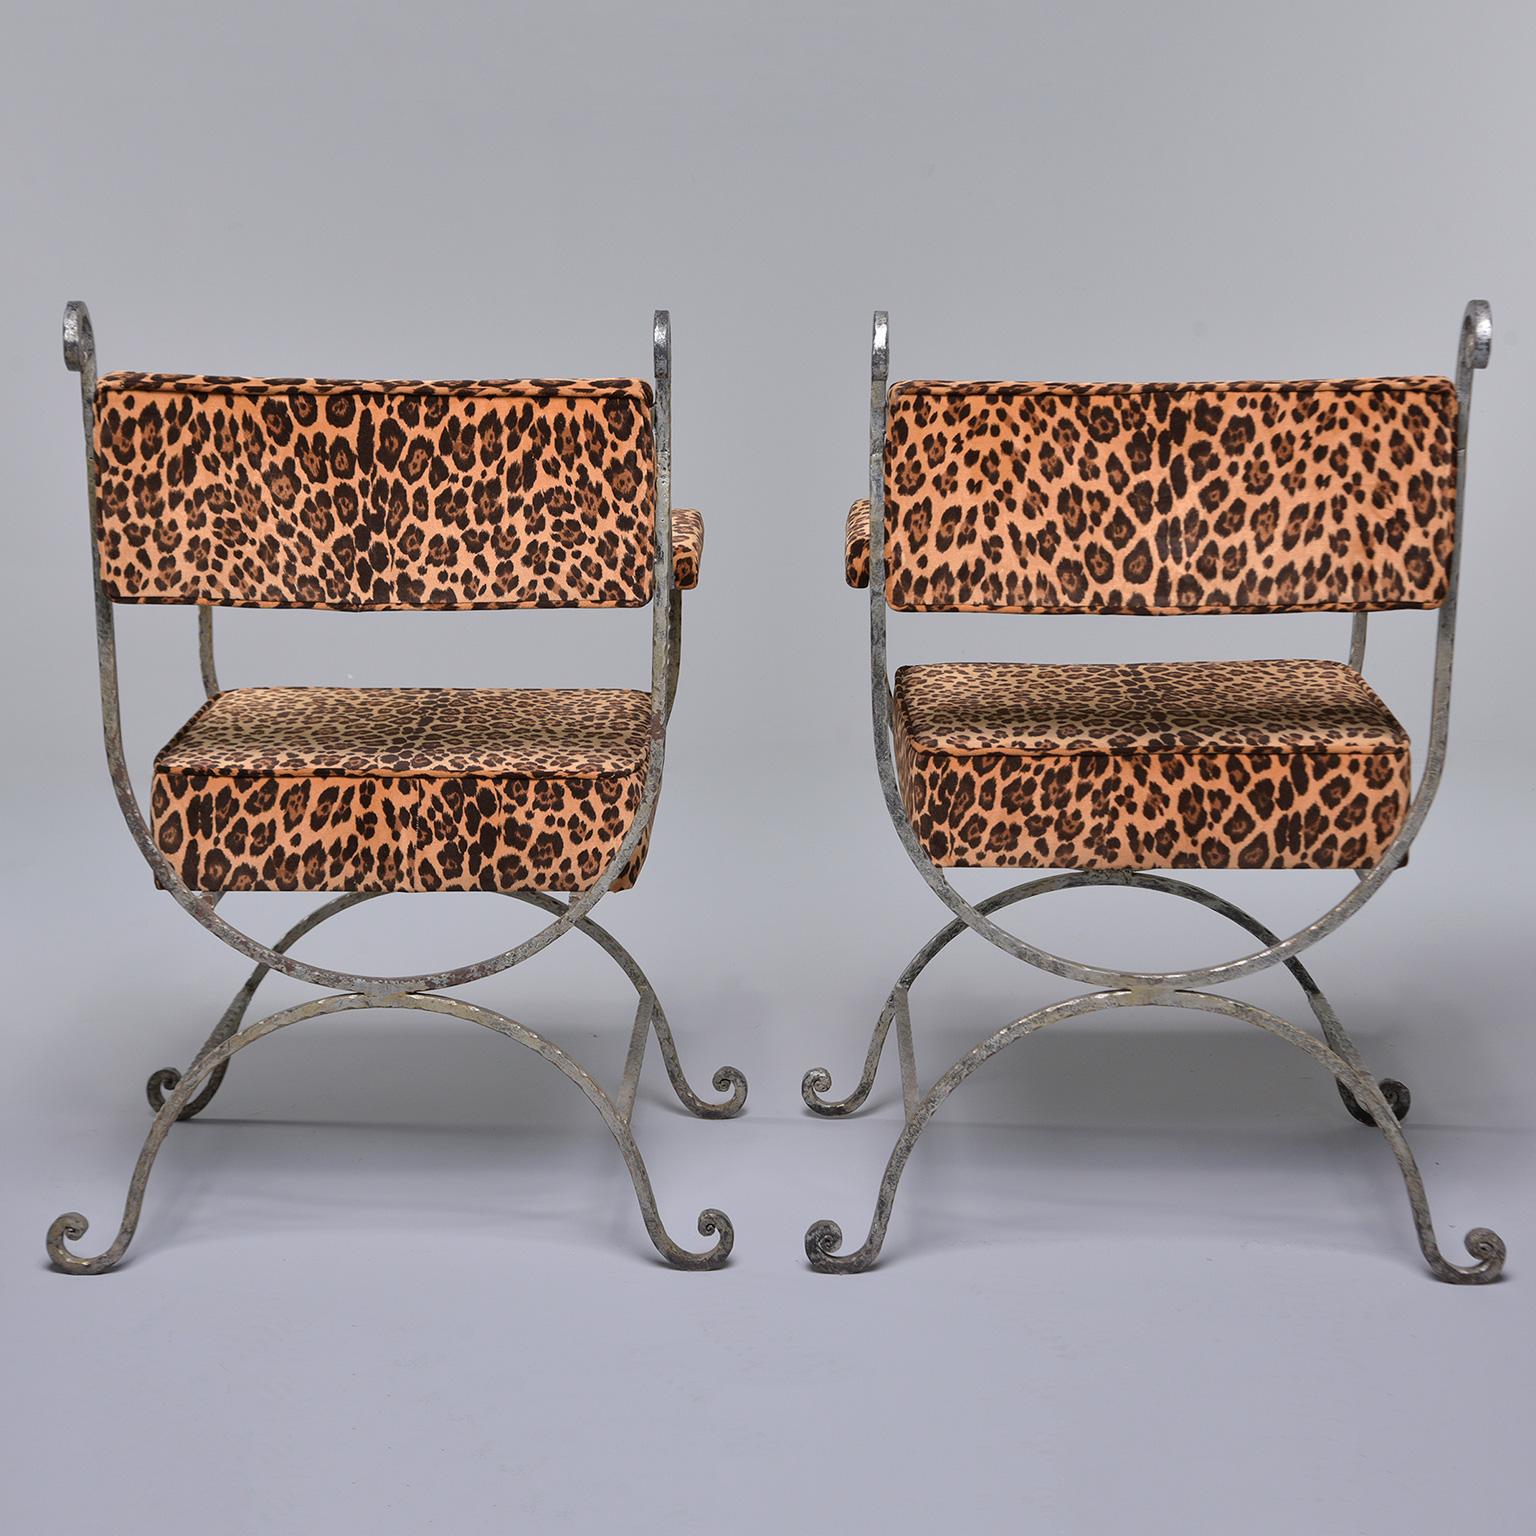 20th Century Pair Iron Savonarola Chairs with Leopard Print Upholstery